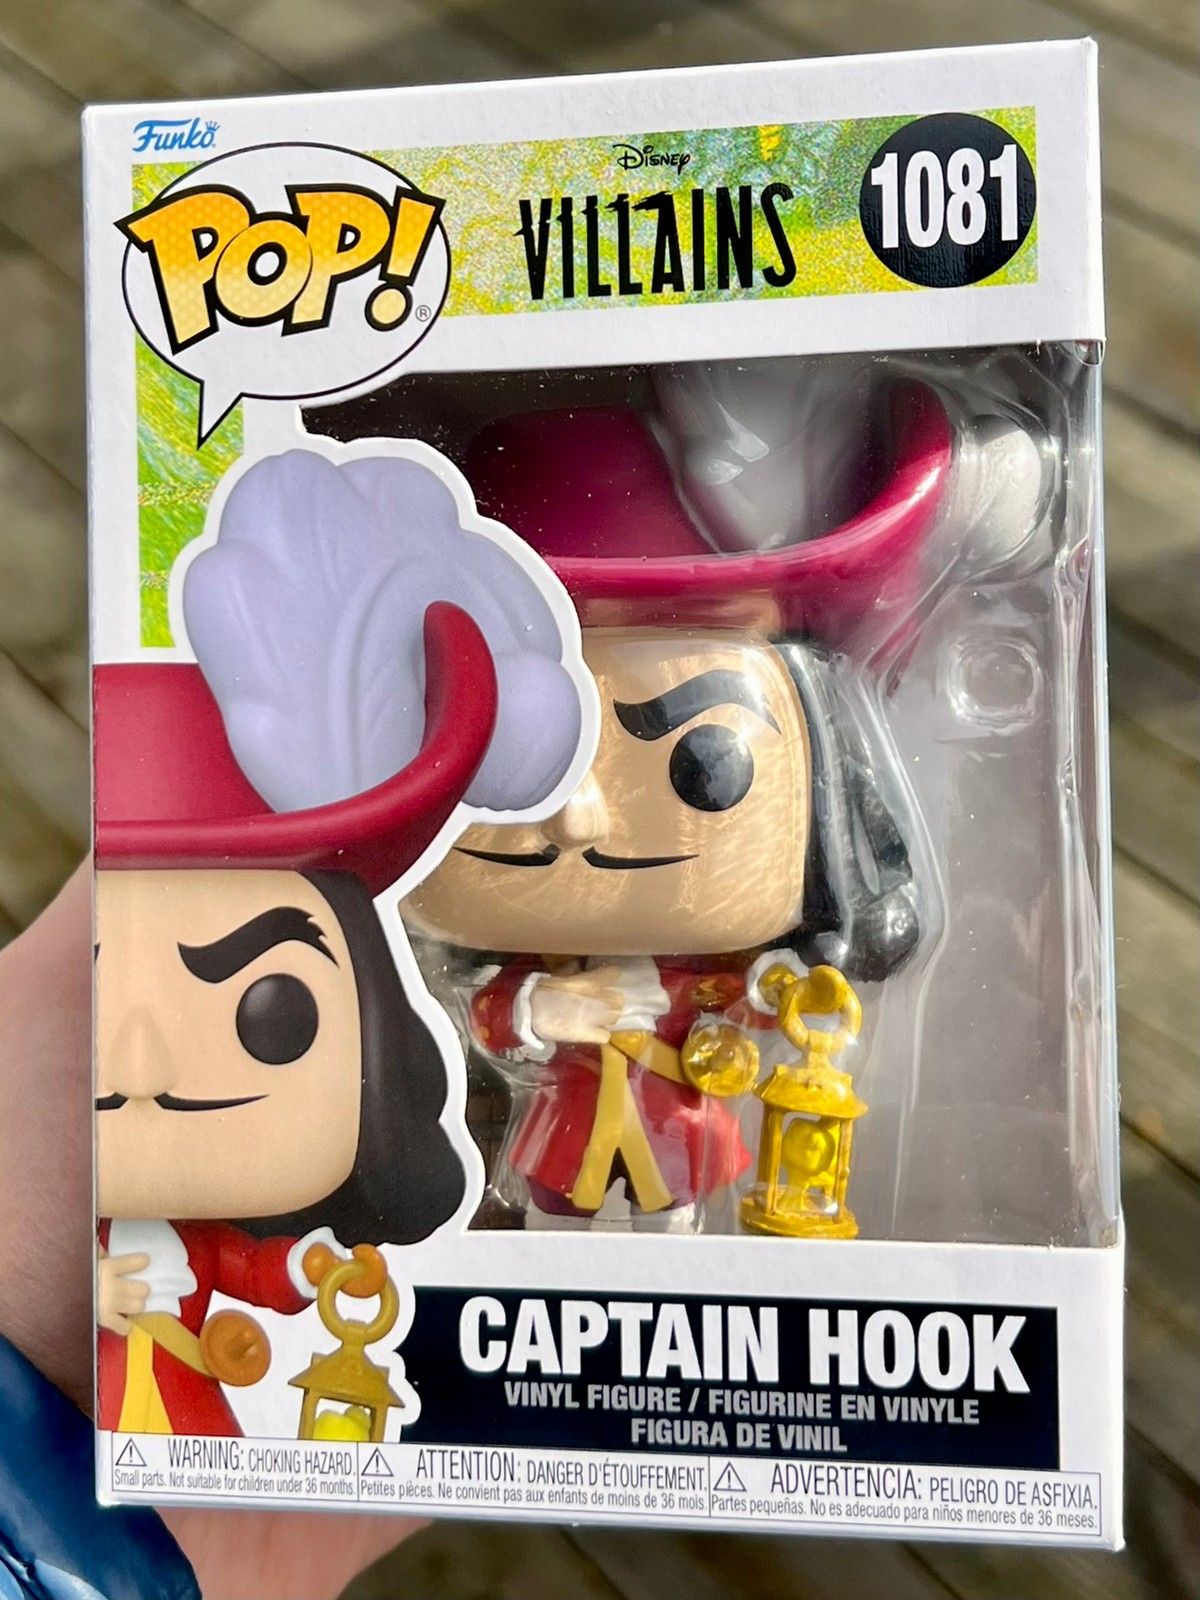 Funko Pop! Captain Hook, Peter Pan